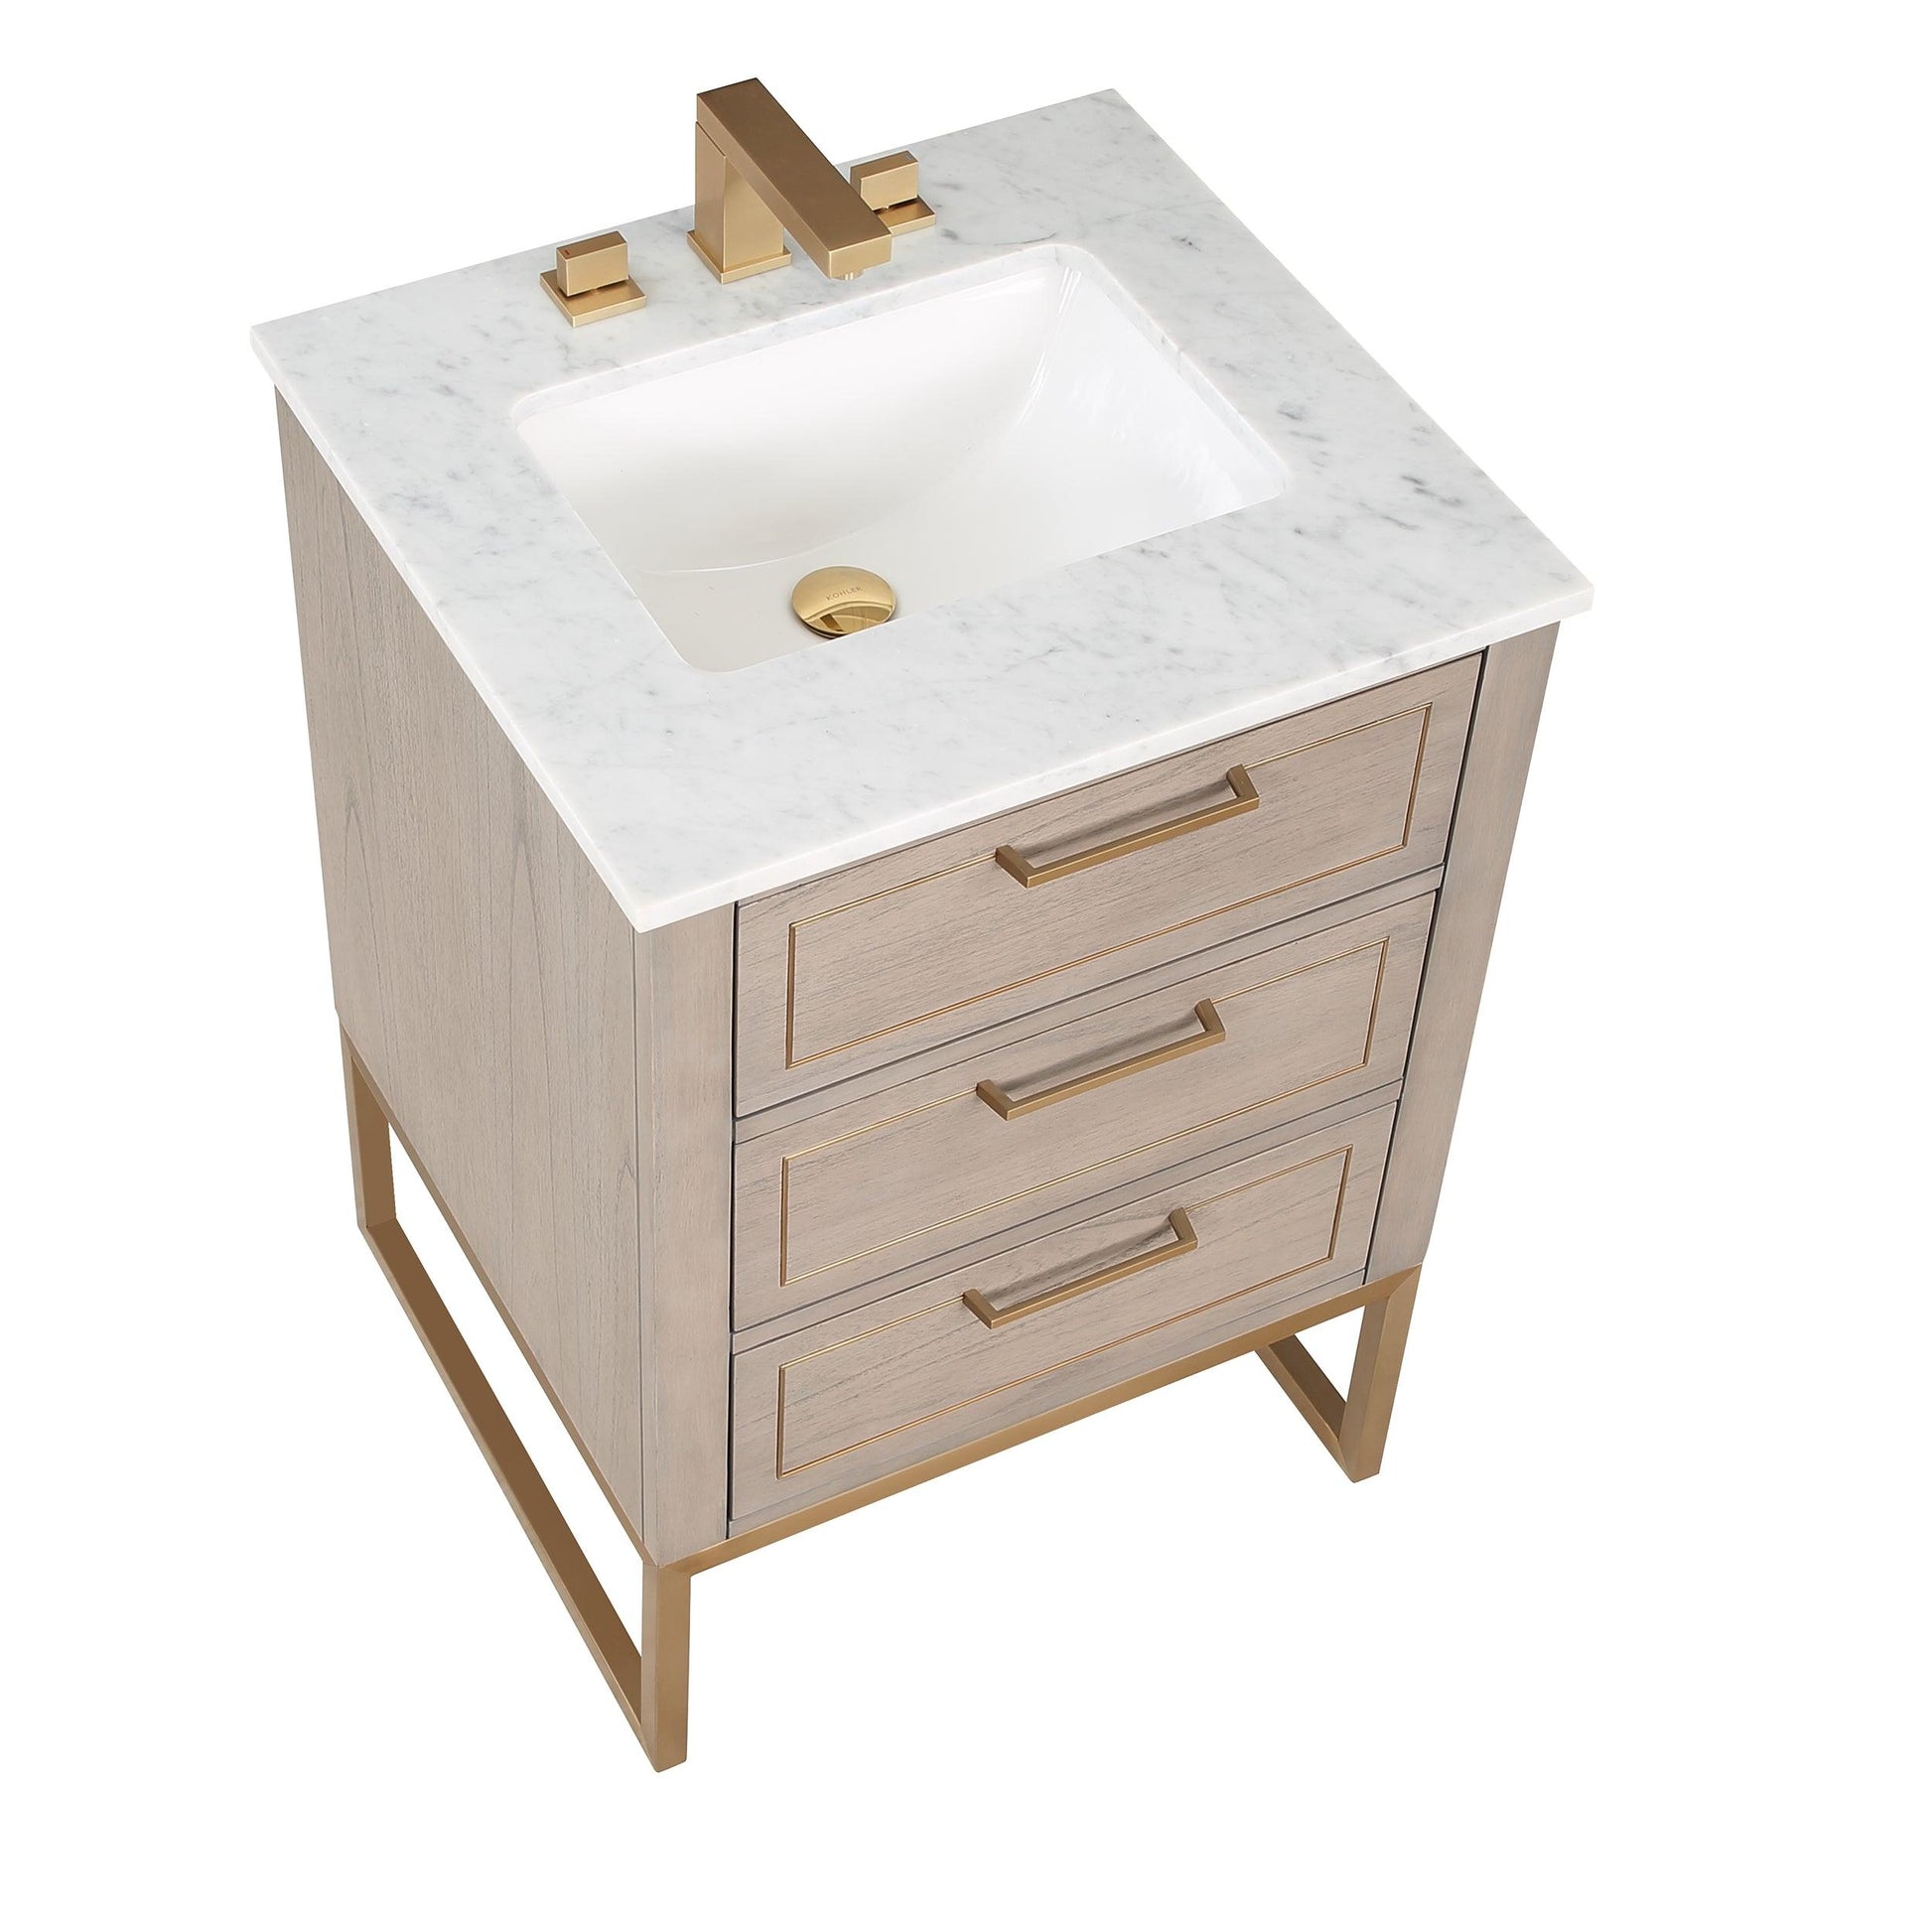 
  
  BEMMA Design Markham Single Bathroom Vanity Set with Quartz or Marble Top
  
